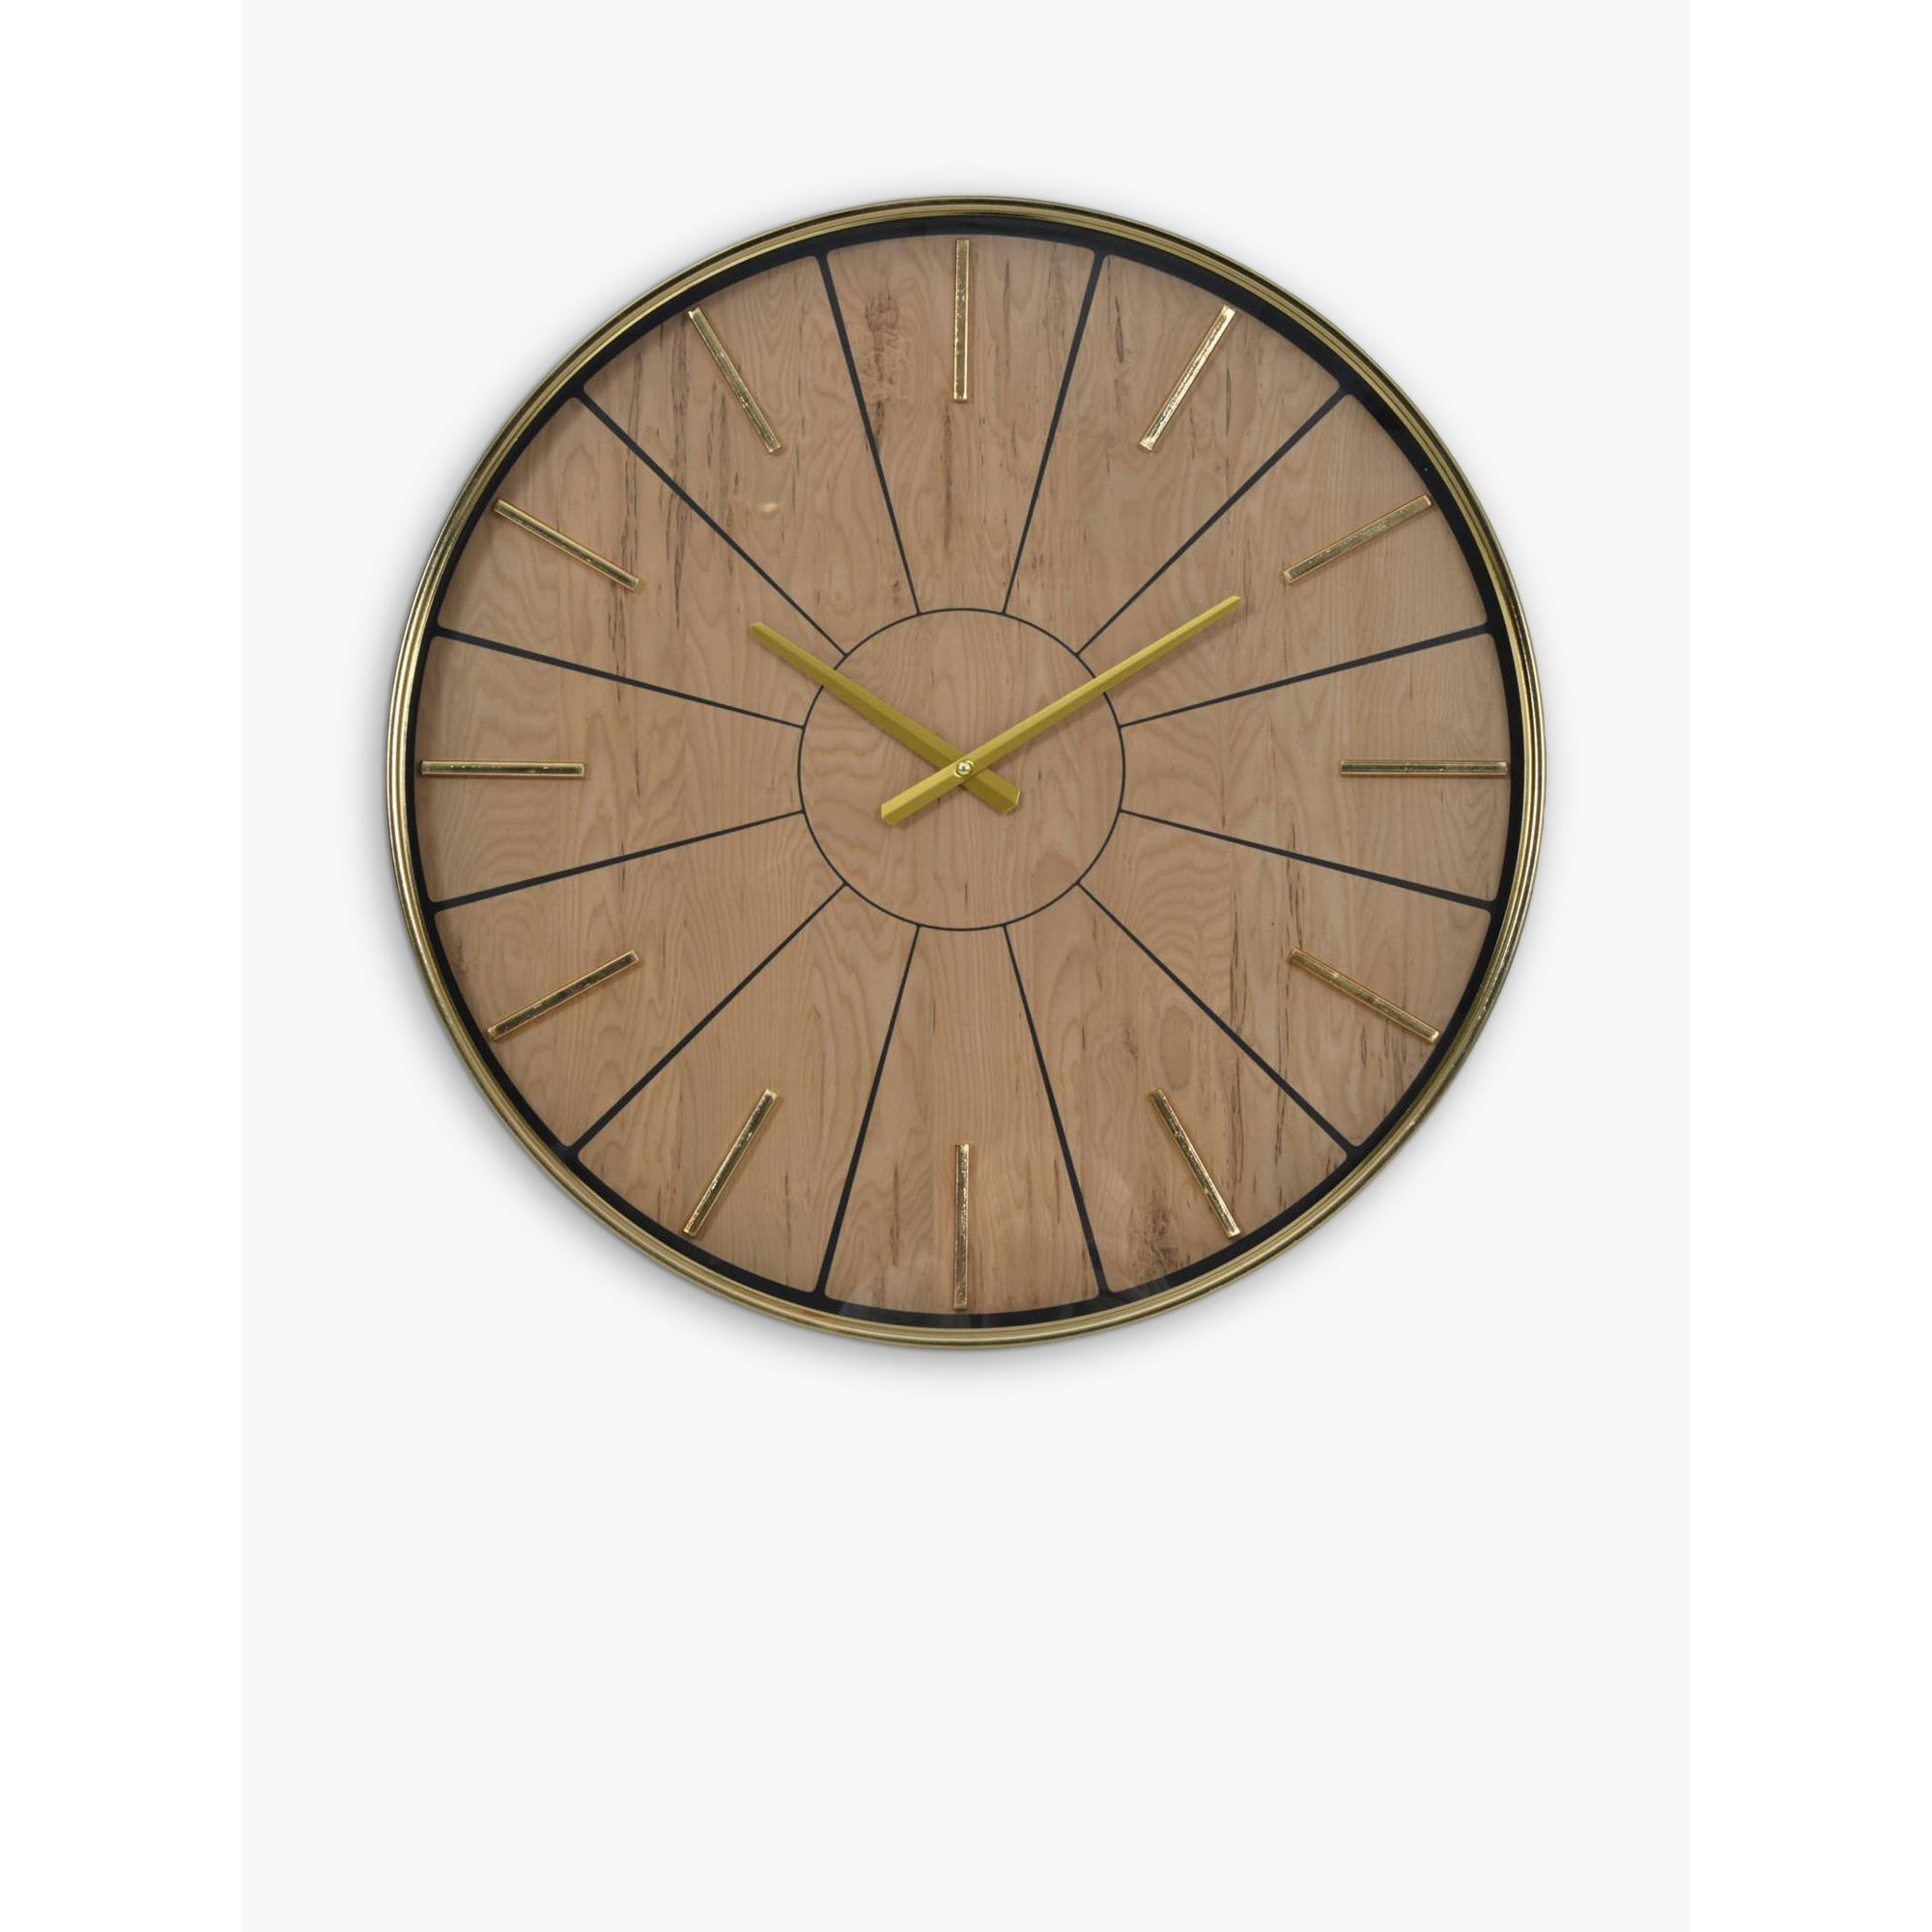 Libra Interiors Riley Wood-Effect Analogue Wall Clock, 60cm, Gold/Brown - image 1